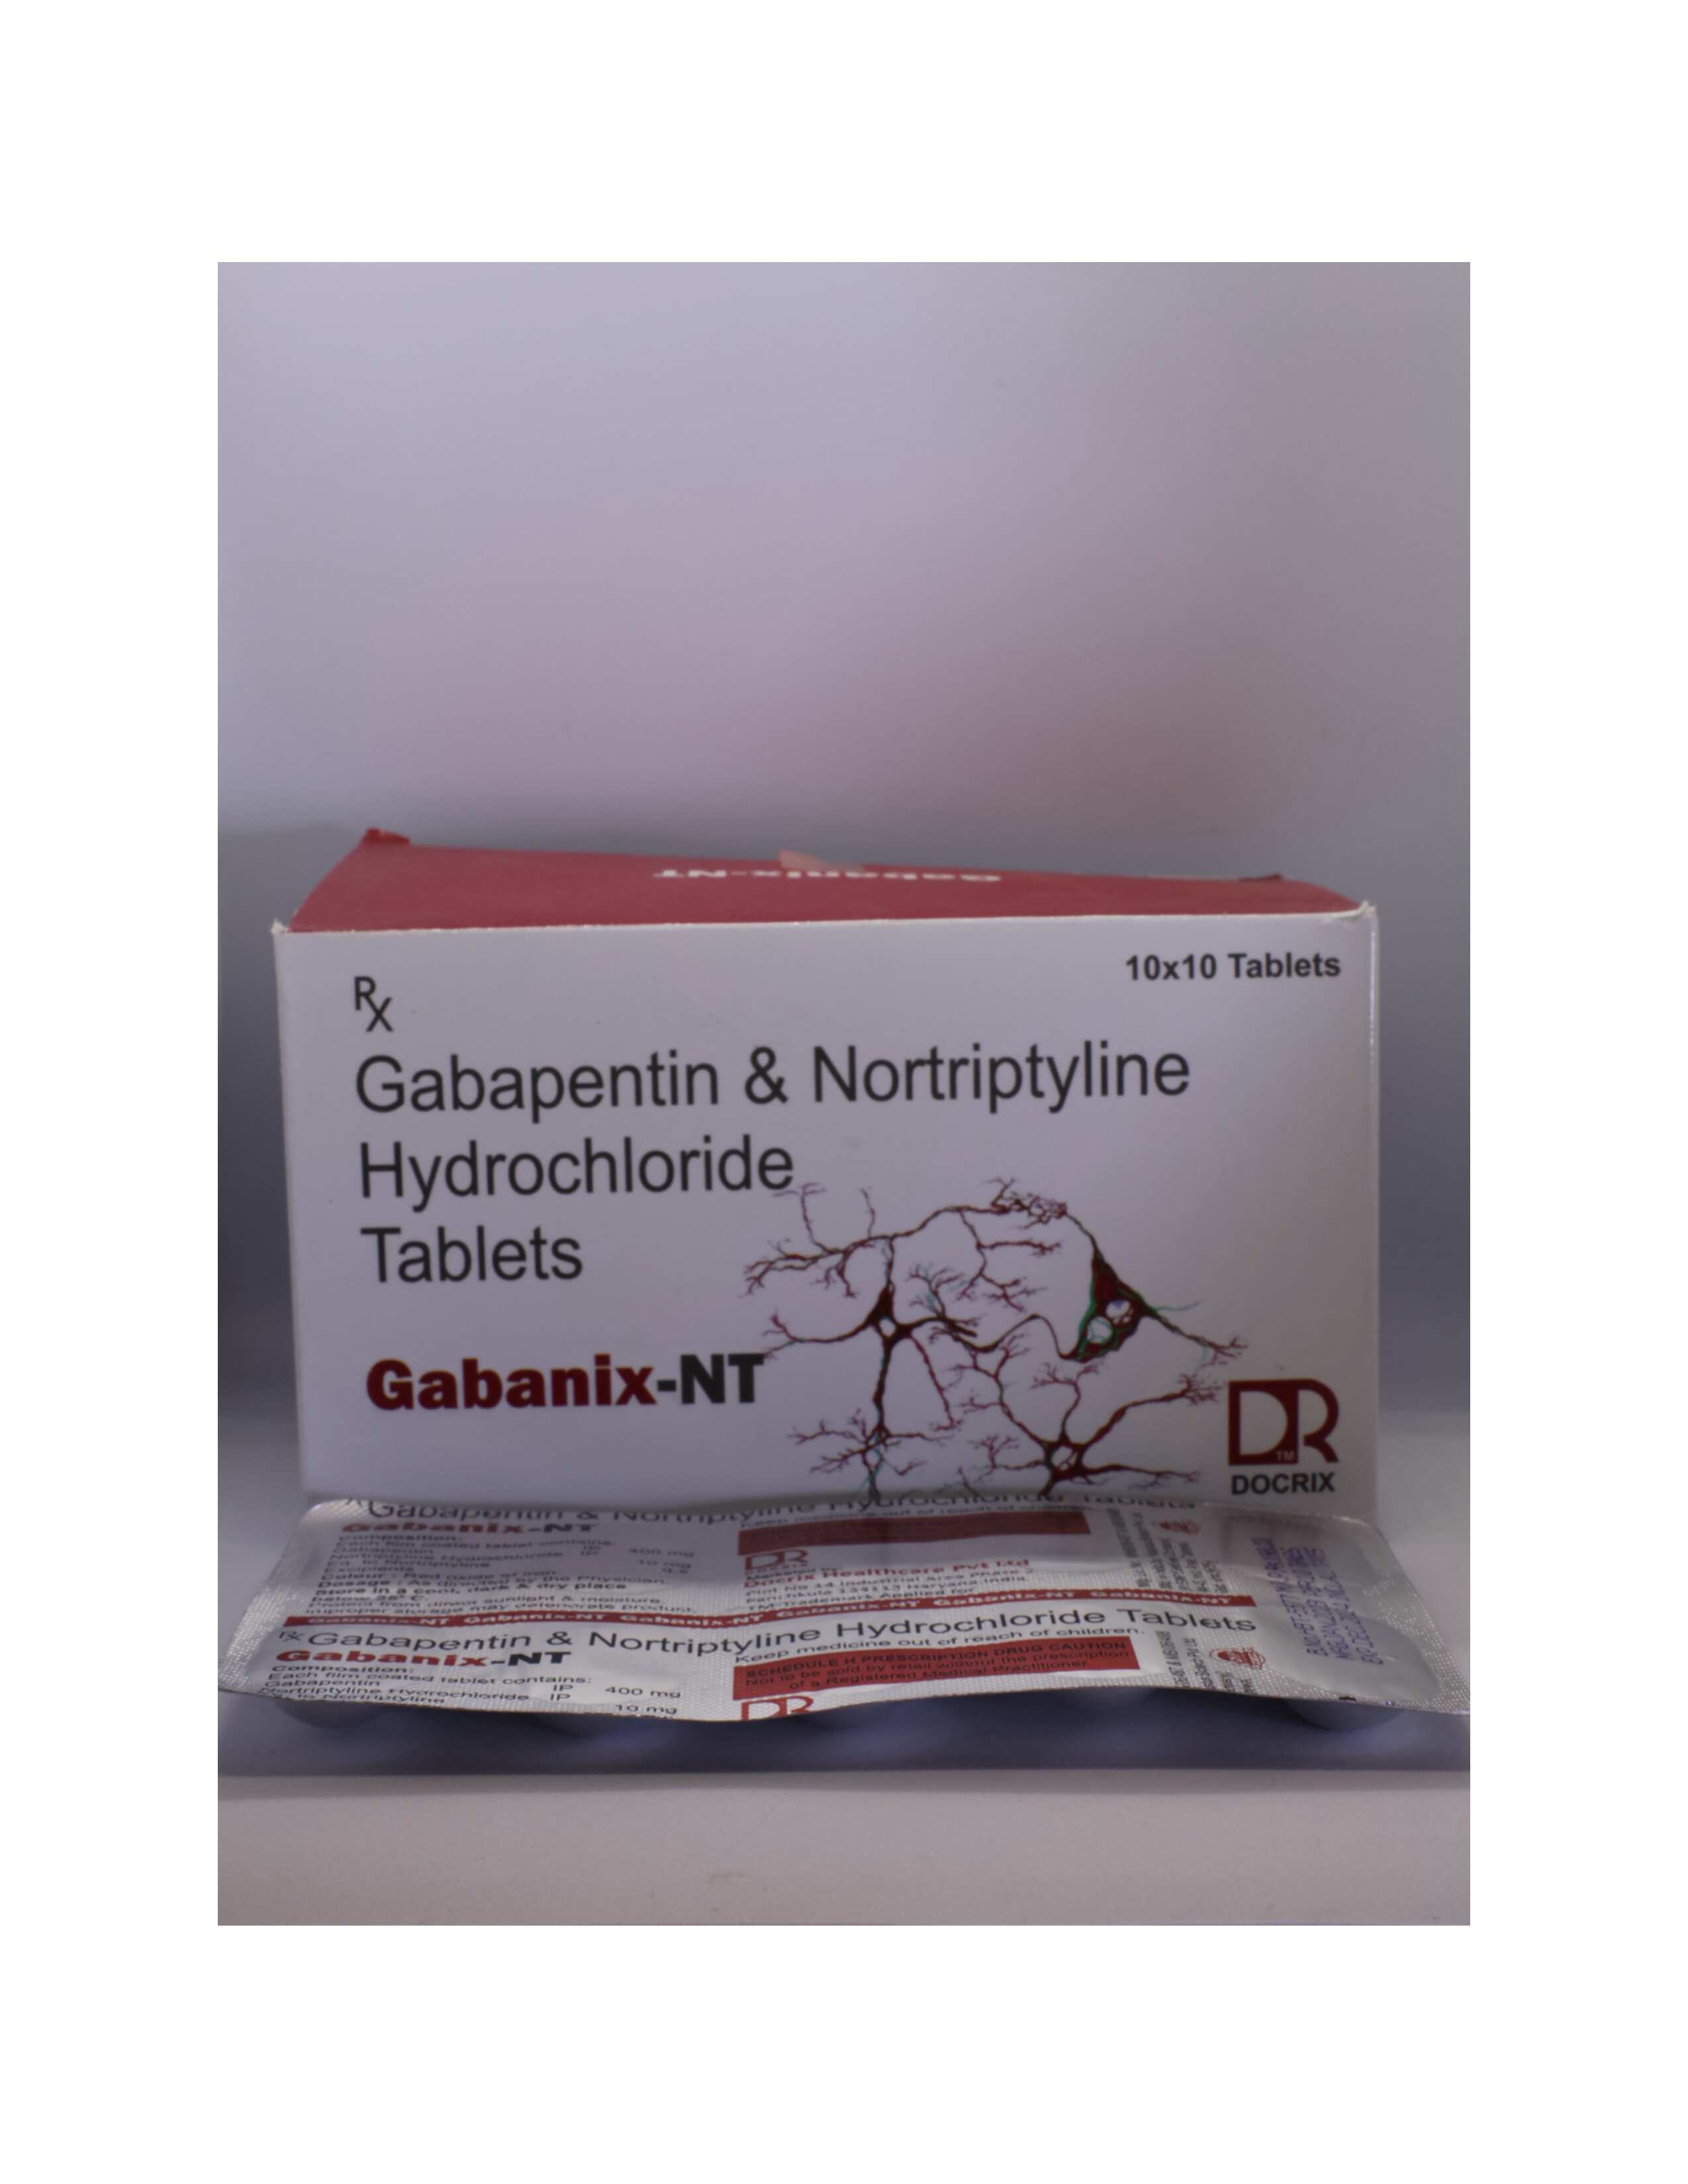 Product Name: Gabanix NT, Compositions of Gabanix NT are Gabapentin & Nortriptyline Hydrochloride Tablets - Docrix Healthcare